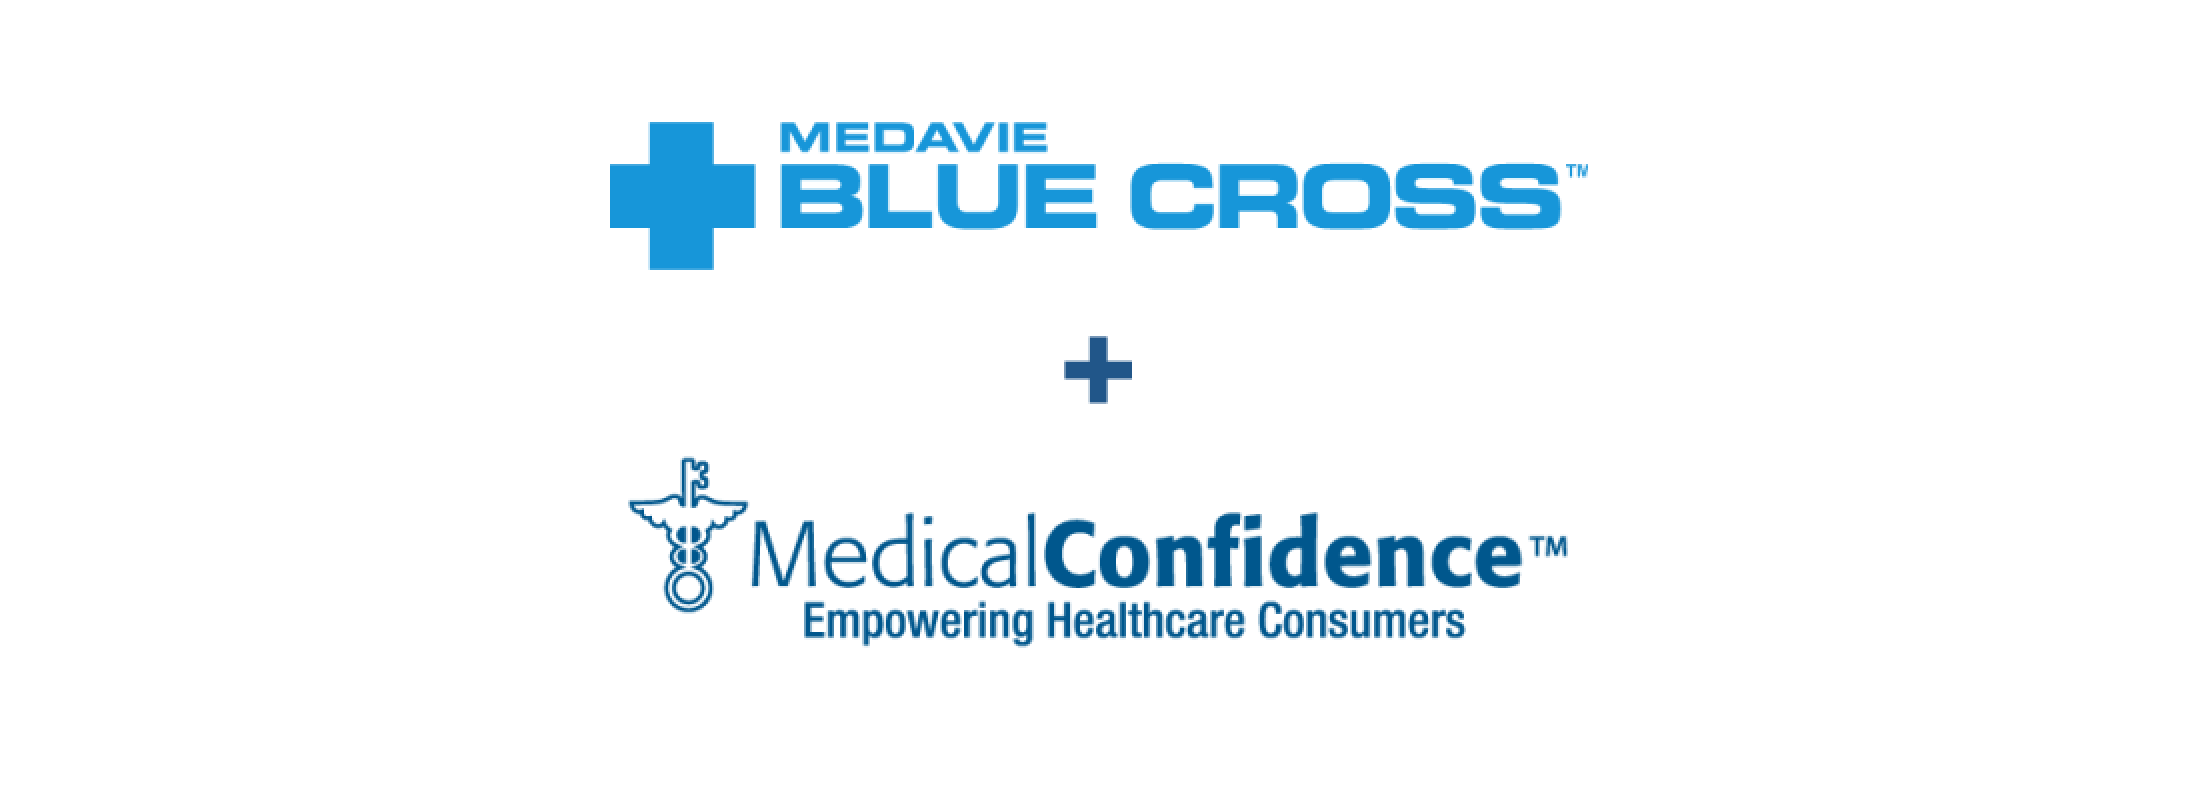 Medavie Blue Cross Partners For Healthcare Navigation